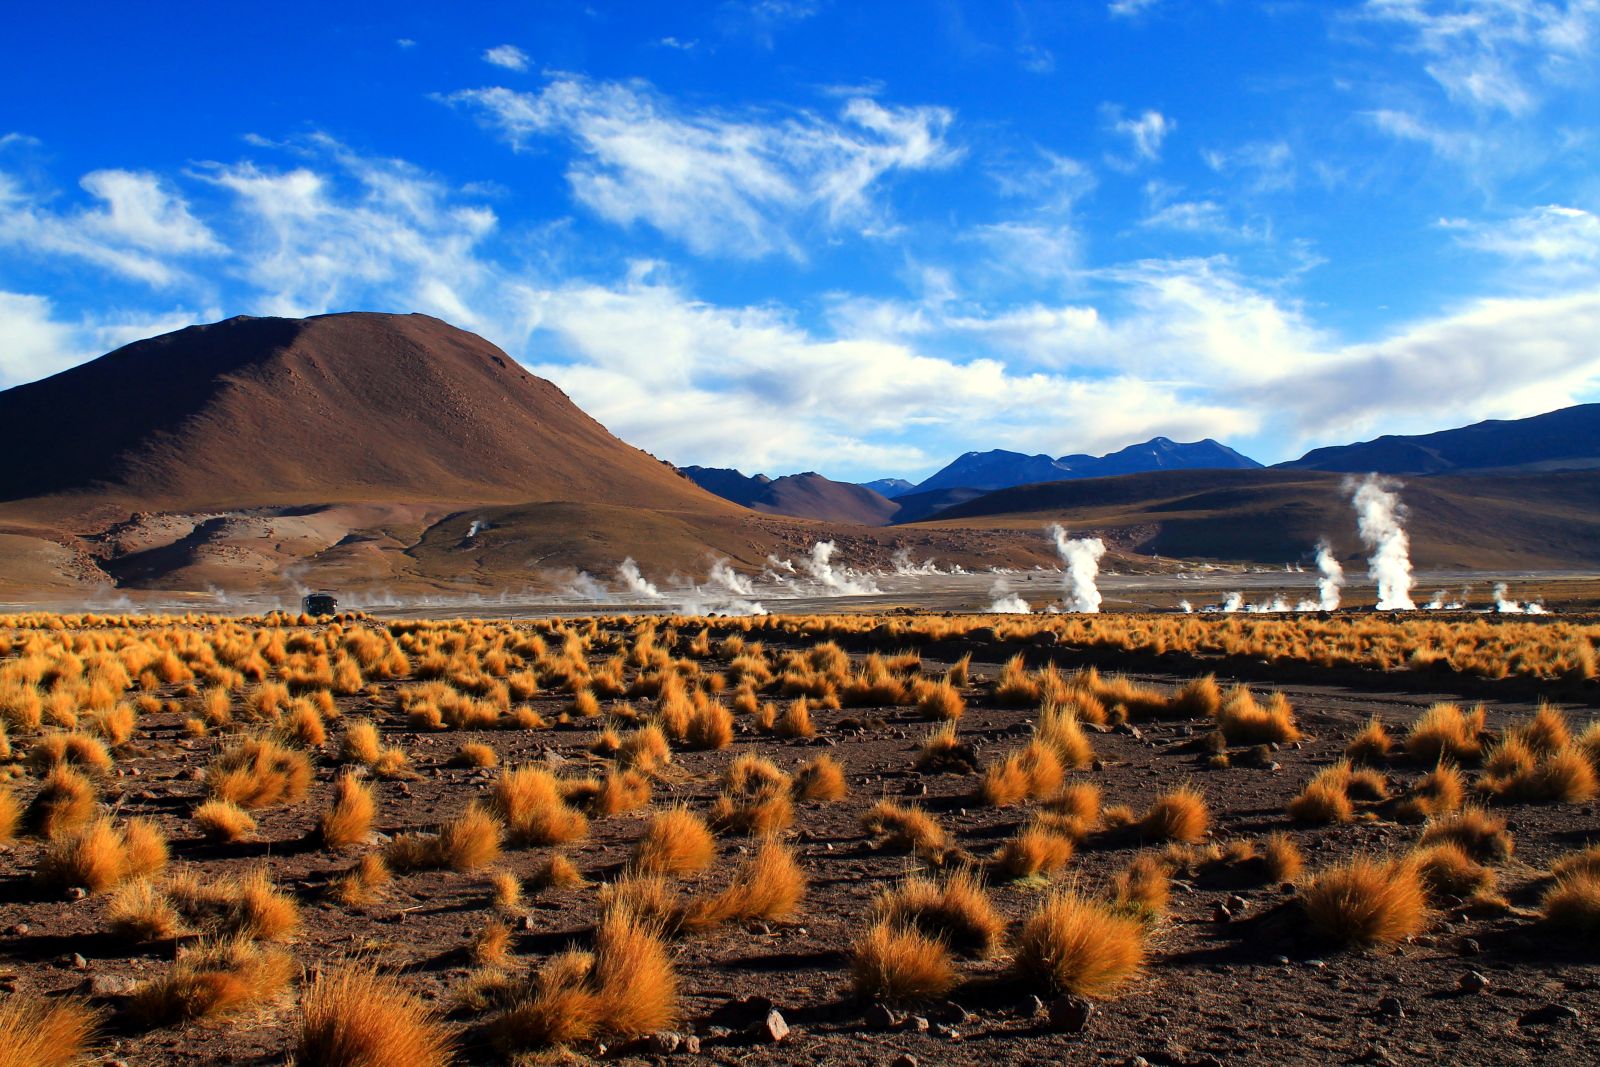 El Tatio geysers in the Atacama Desert in Chile